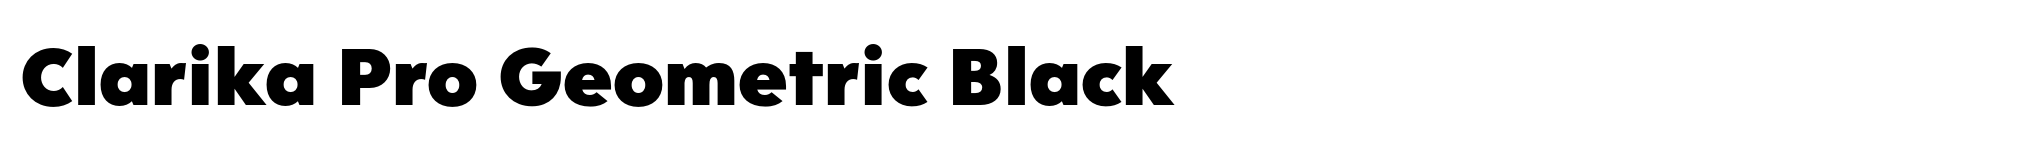 Clarika Pro Geometric Black image